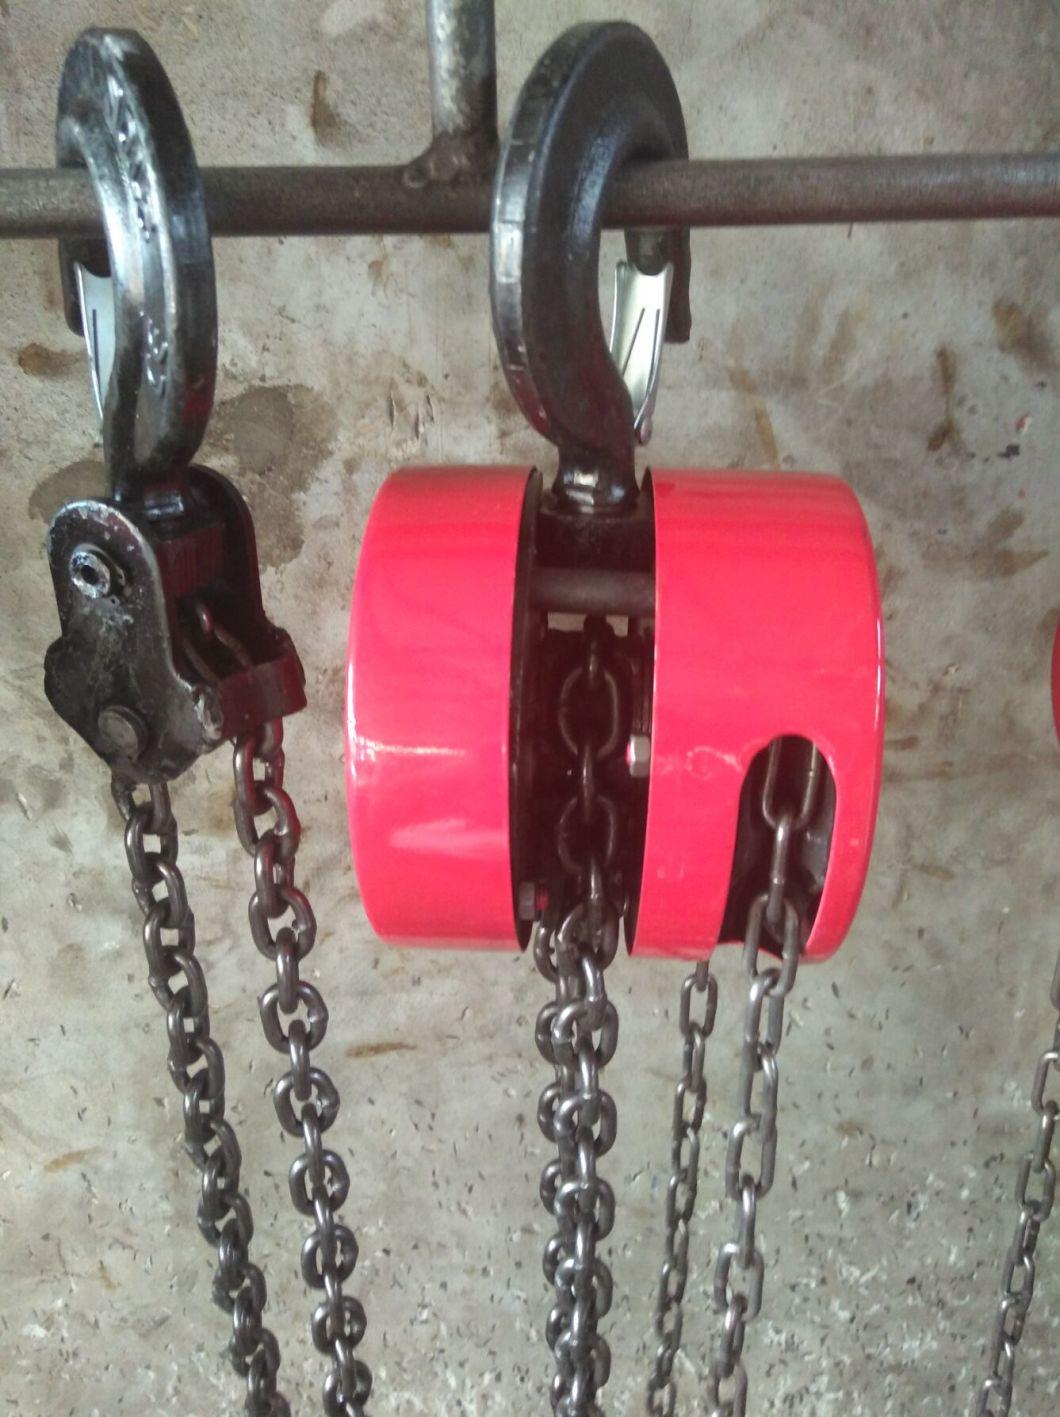 2 Tons Manual Chain Pulley Block Lifting Hoist Manual Chain Pulley Block Hoist Mini Hand Pulling Chain Hoist with Hook Manual Chain Block Hoist with Hook